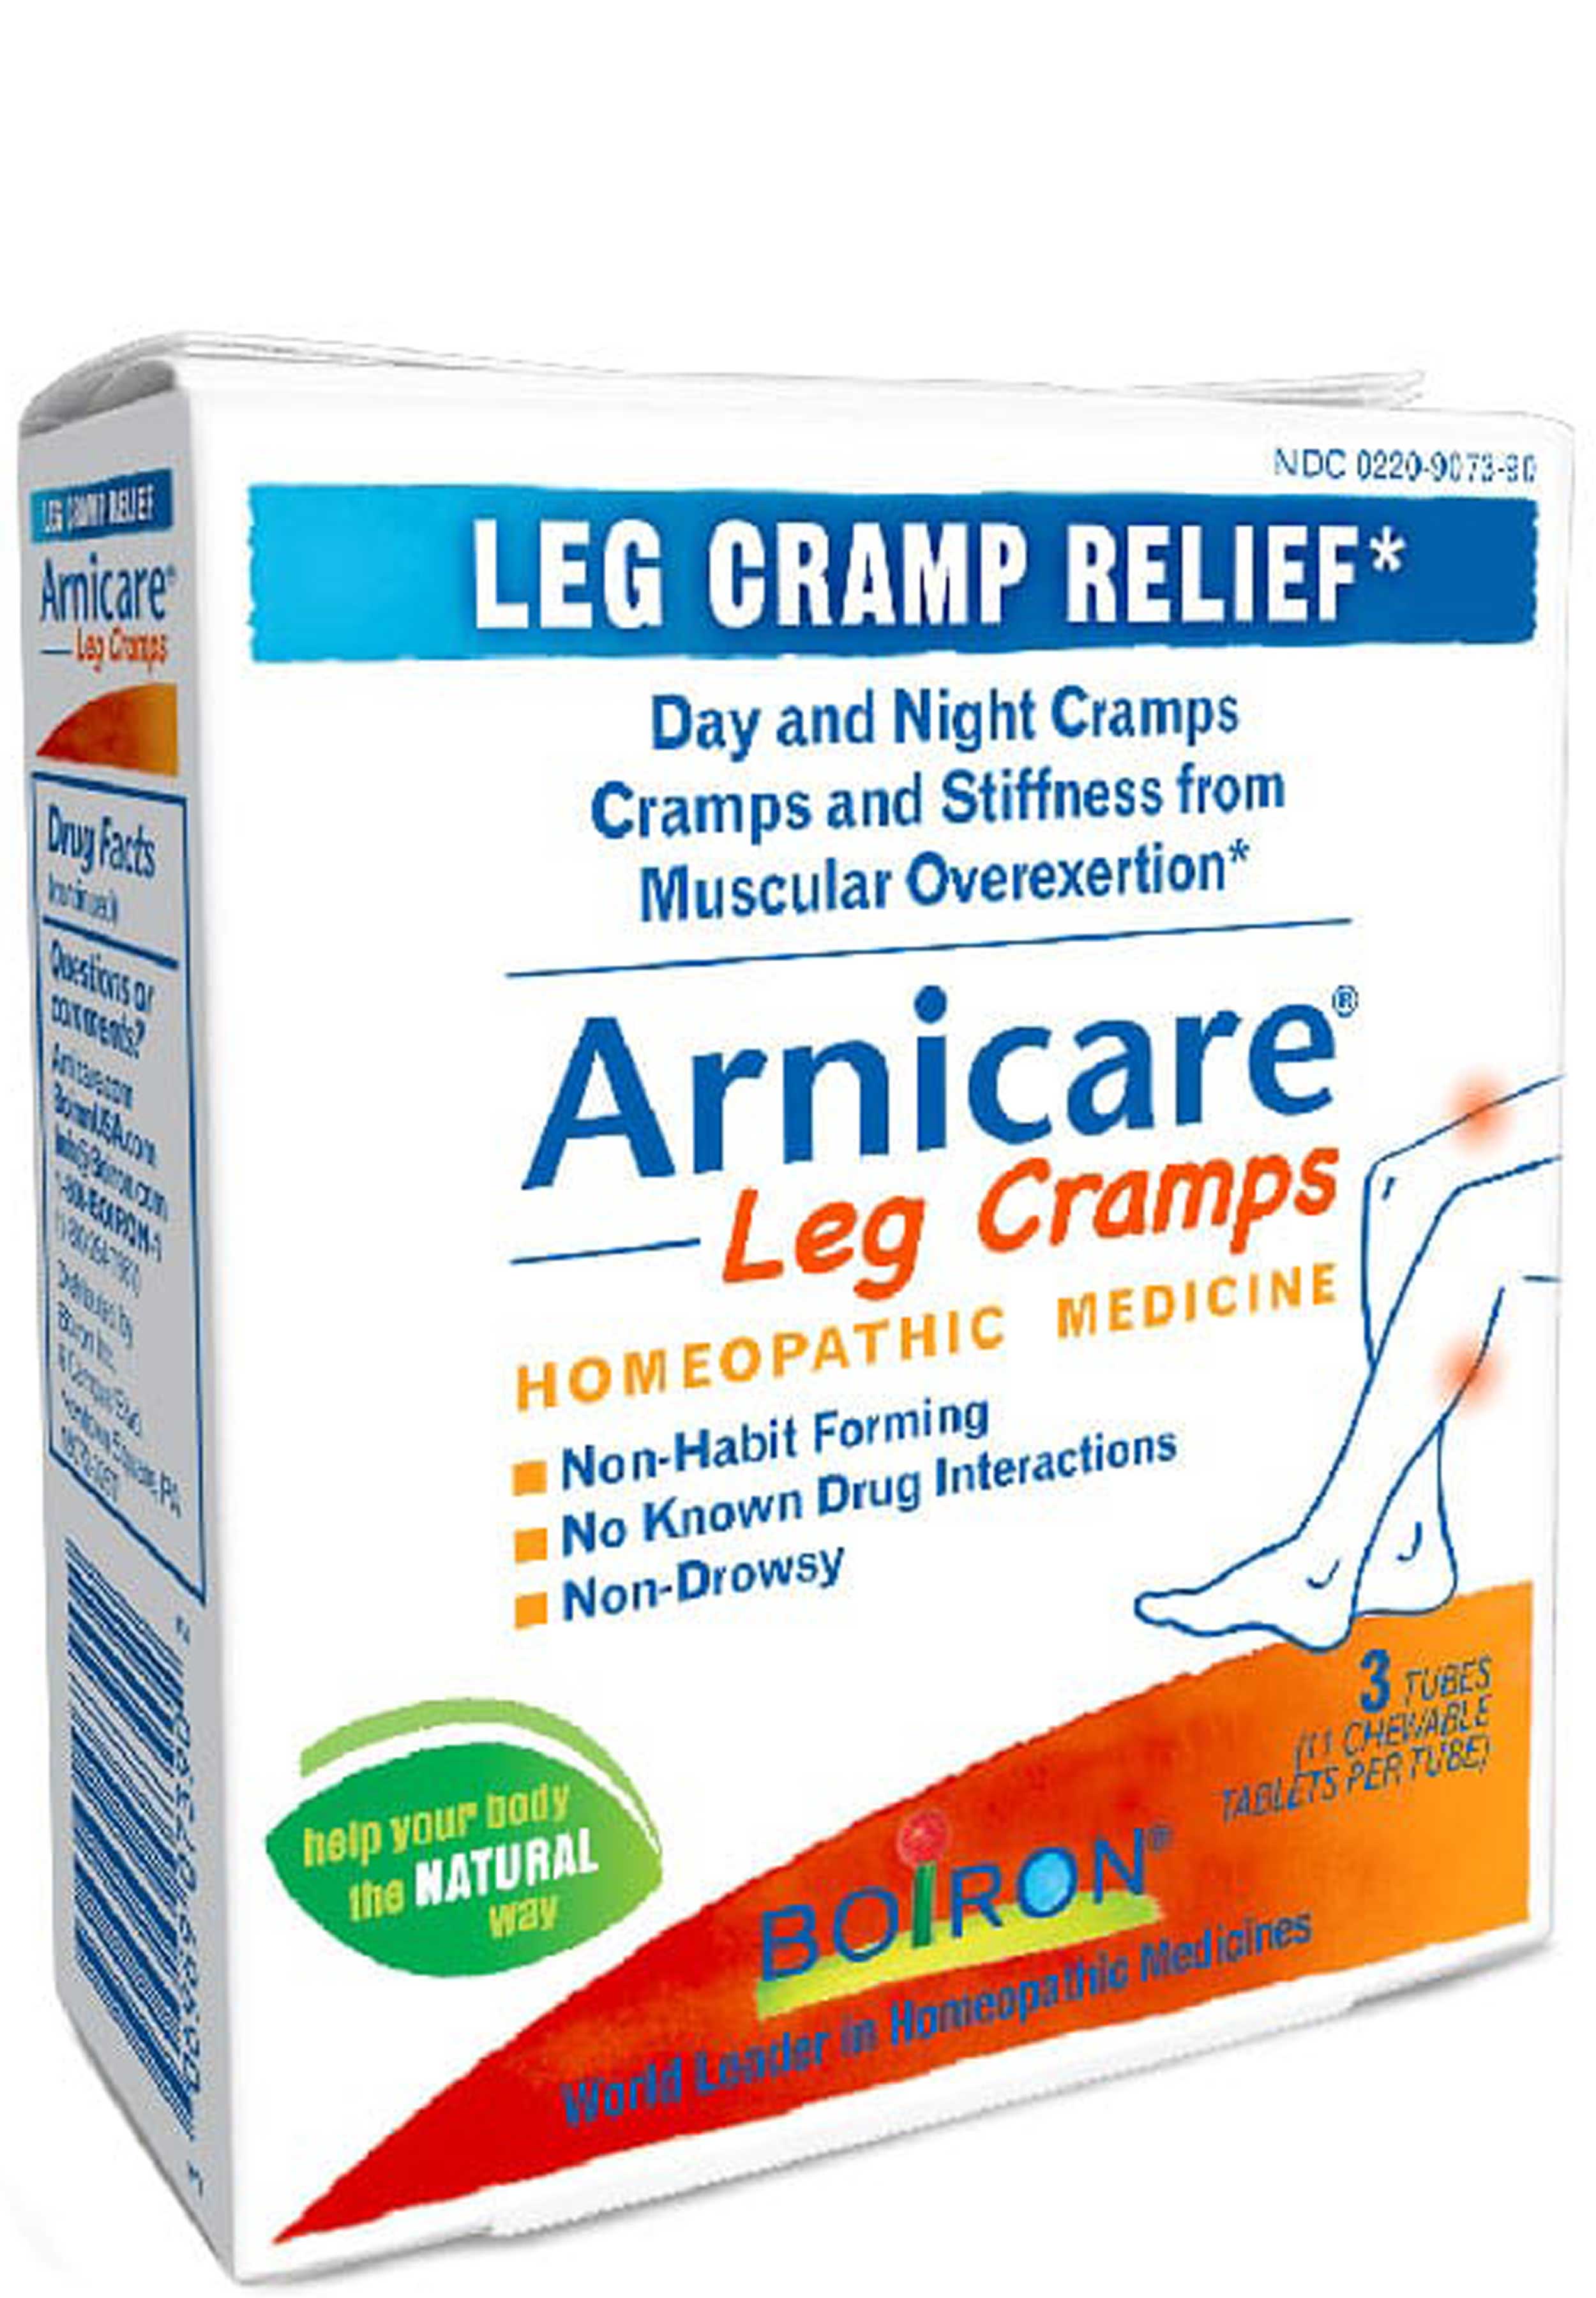 Boiron Homeopathics Arnicare Leg Cramps